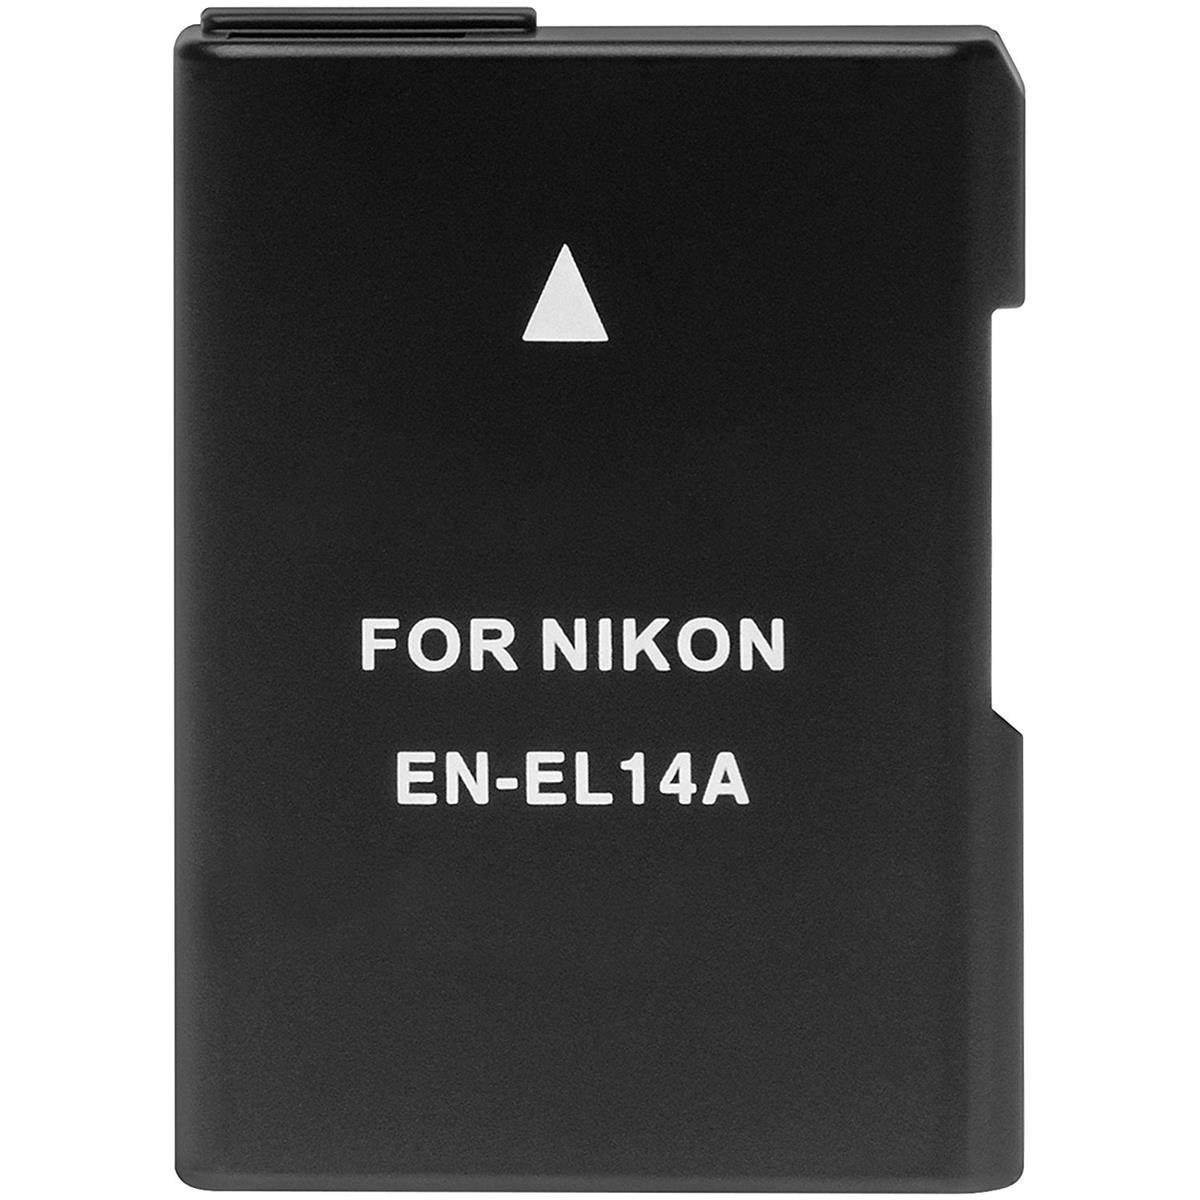 Image of Power2000 EN-EL14a 7.4V Rechargeable Lithium-Ion Battery for Nikon DSLR Cameras